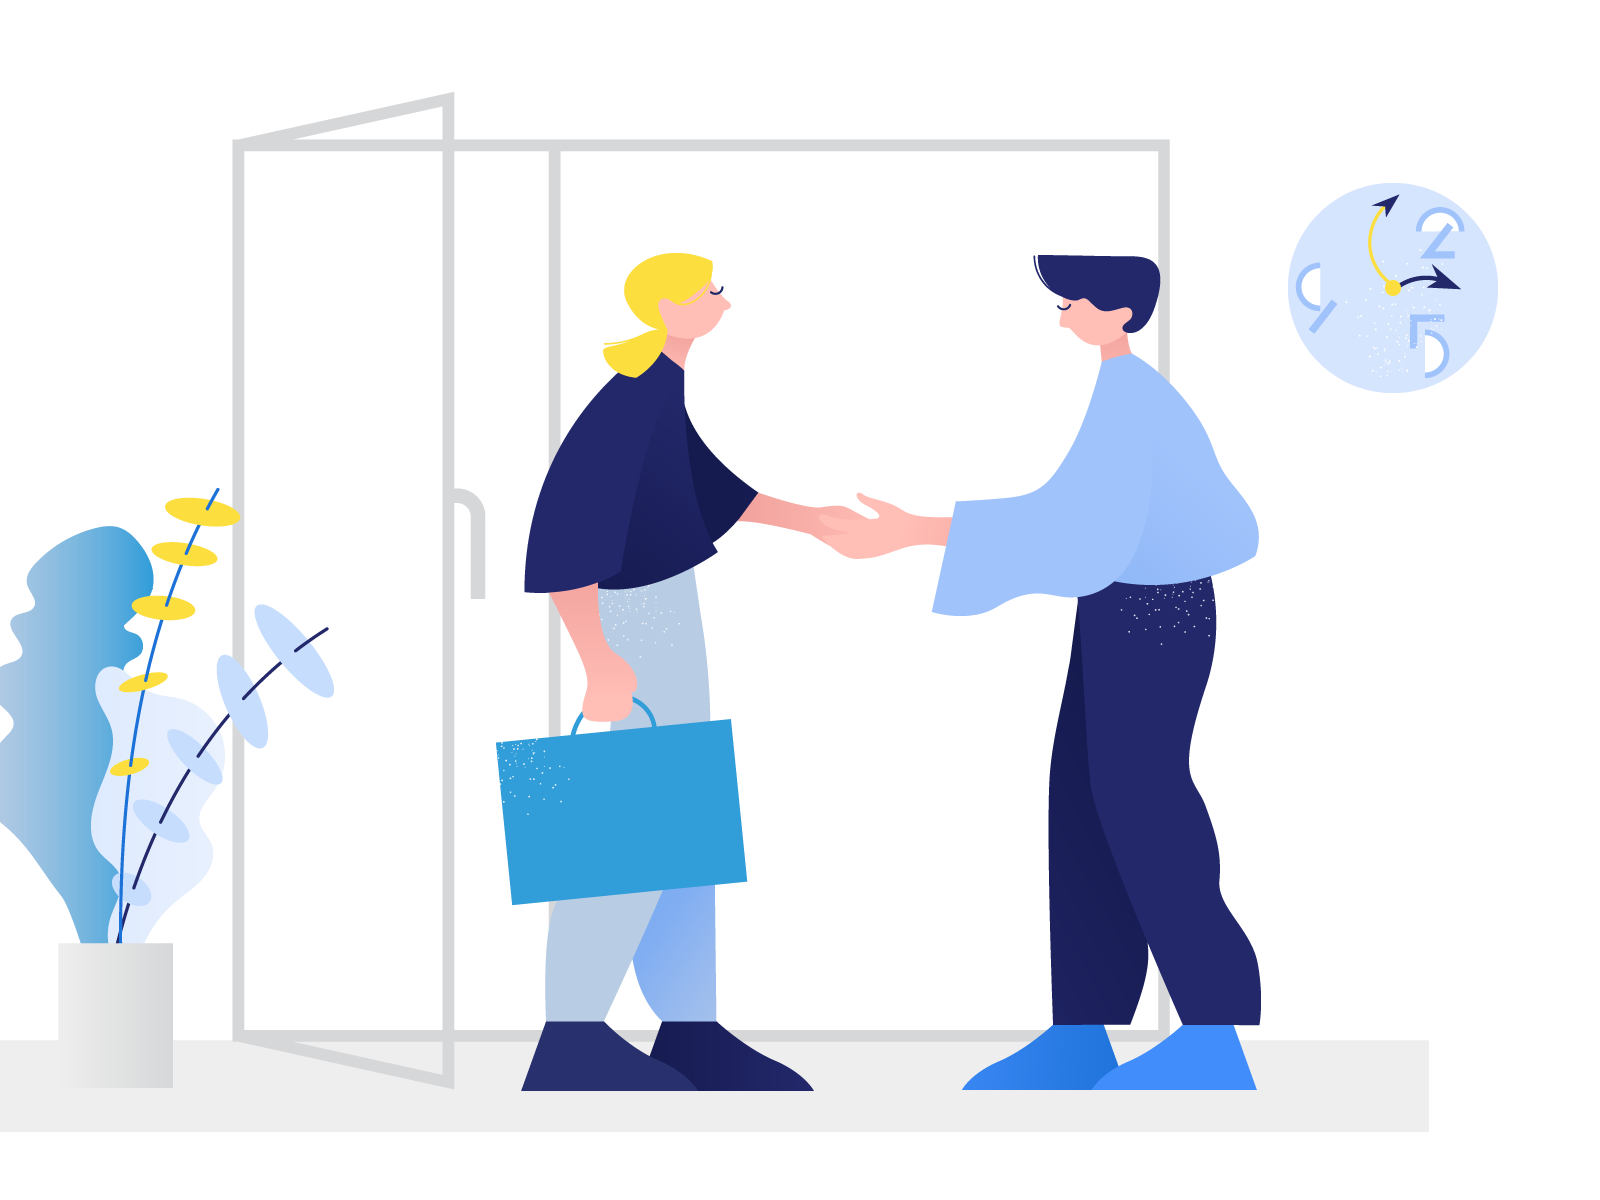 Business people shaking hands illustration